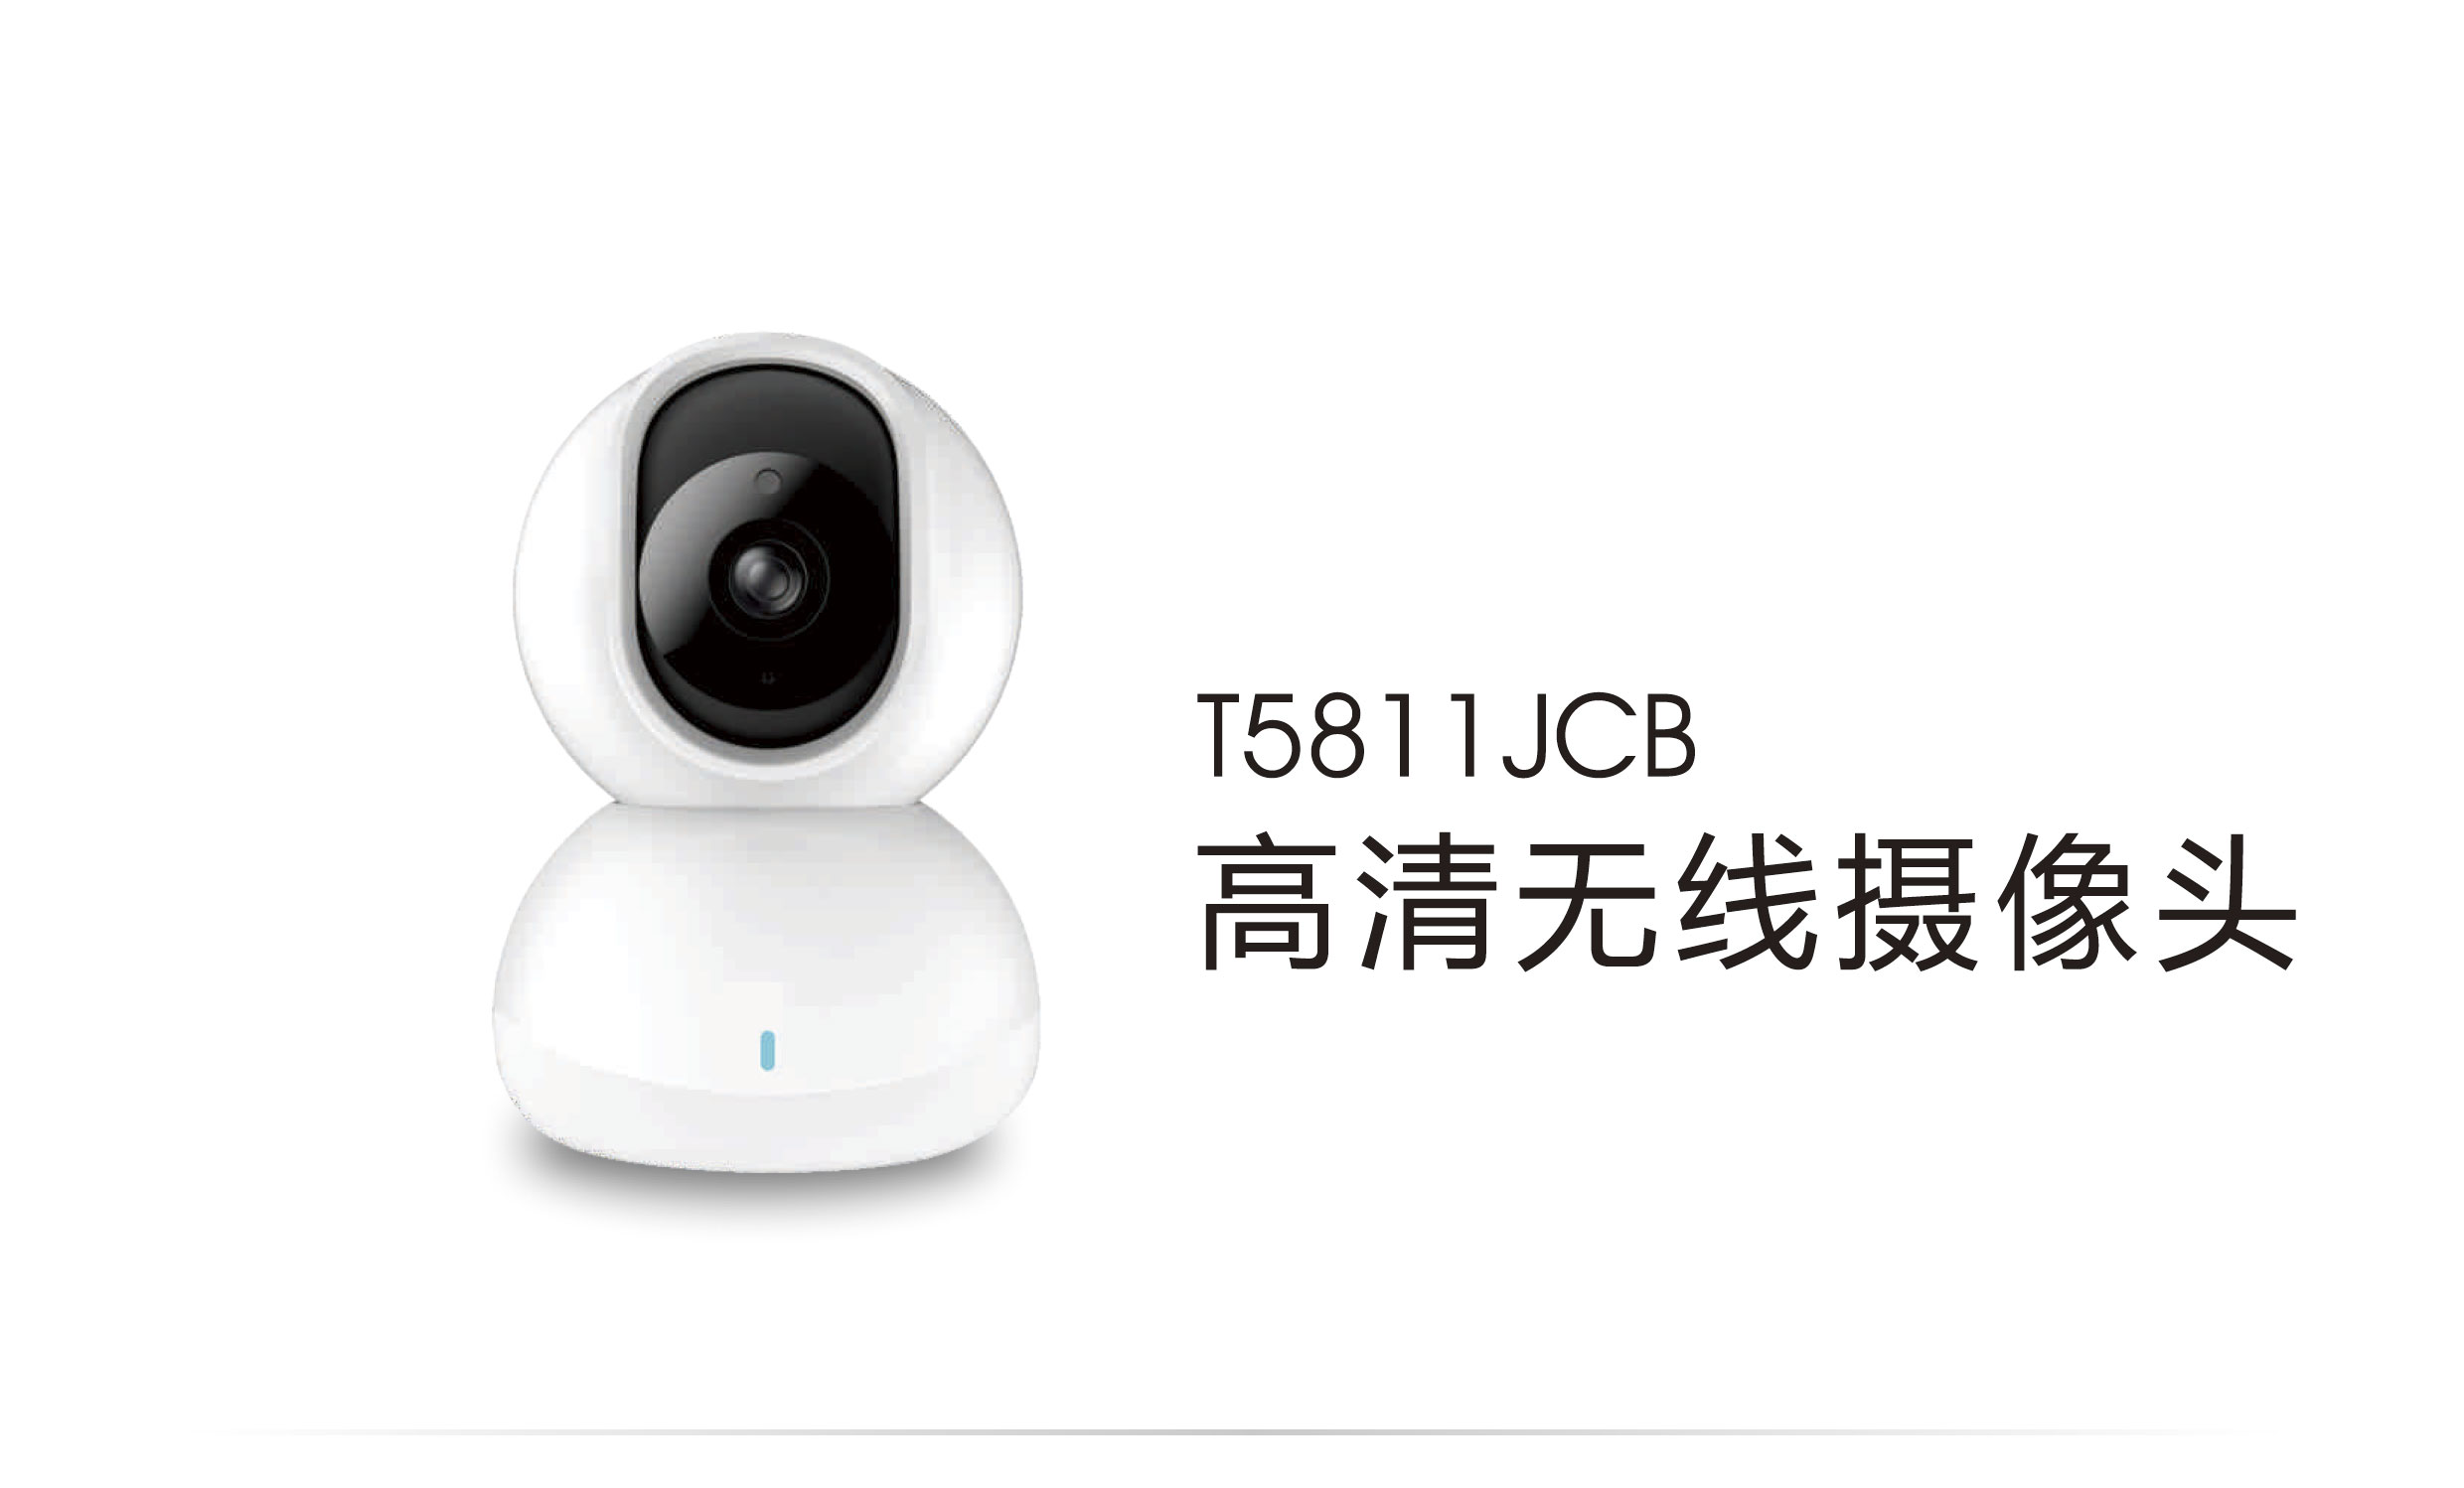 T5811JCB IP Camera